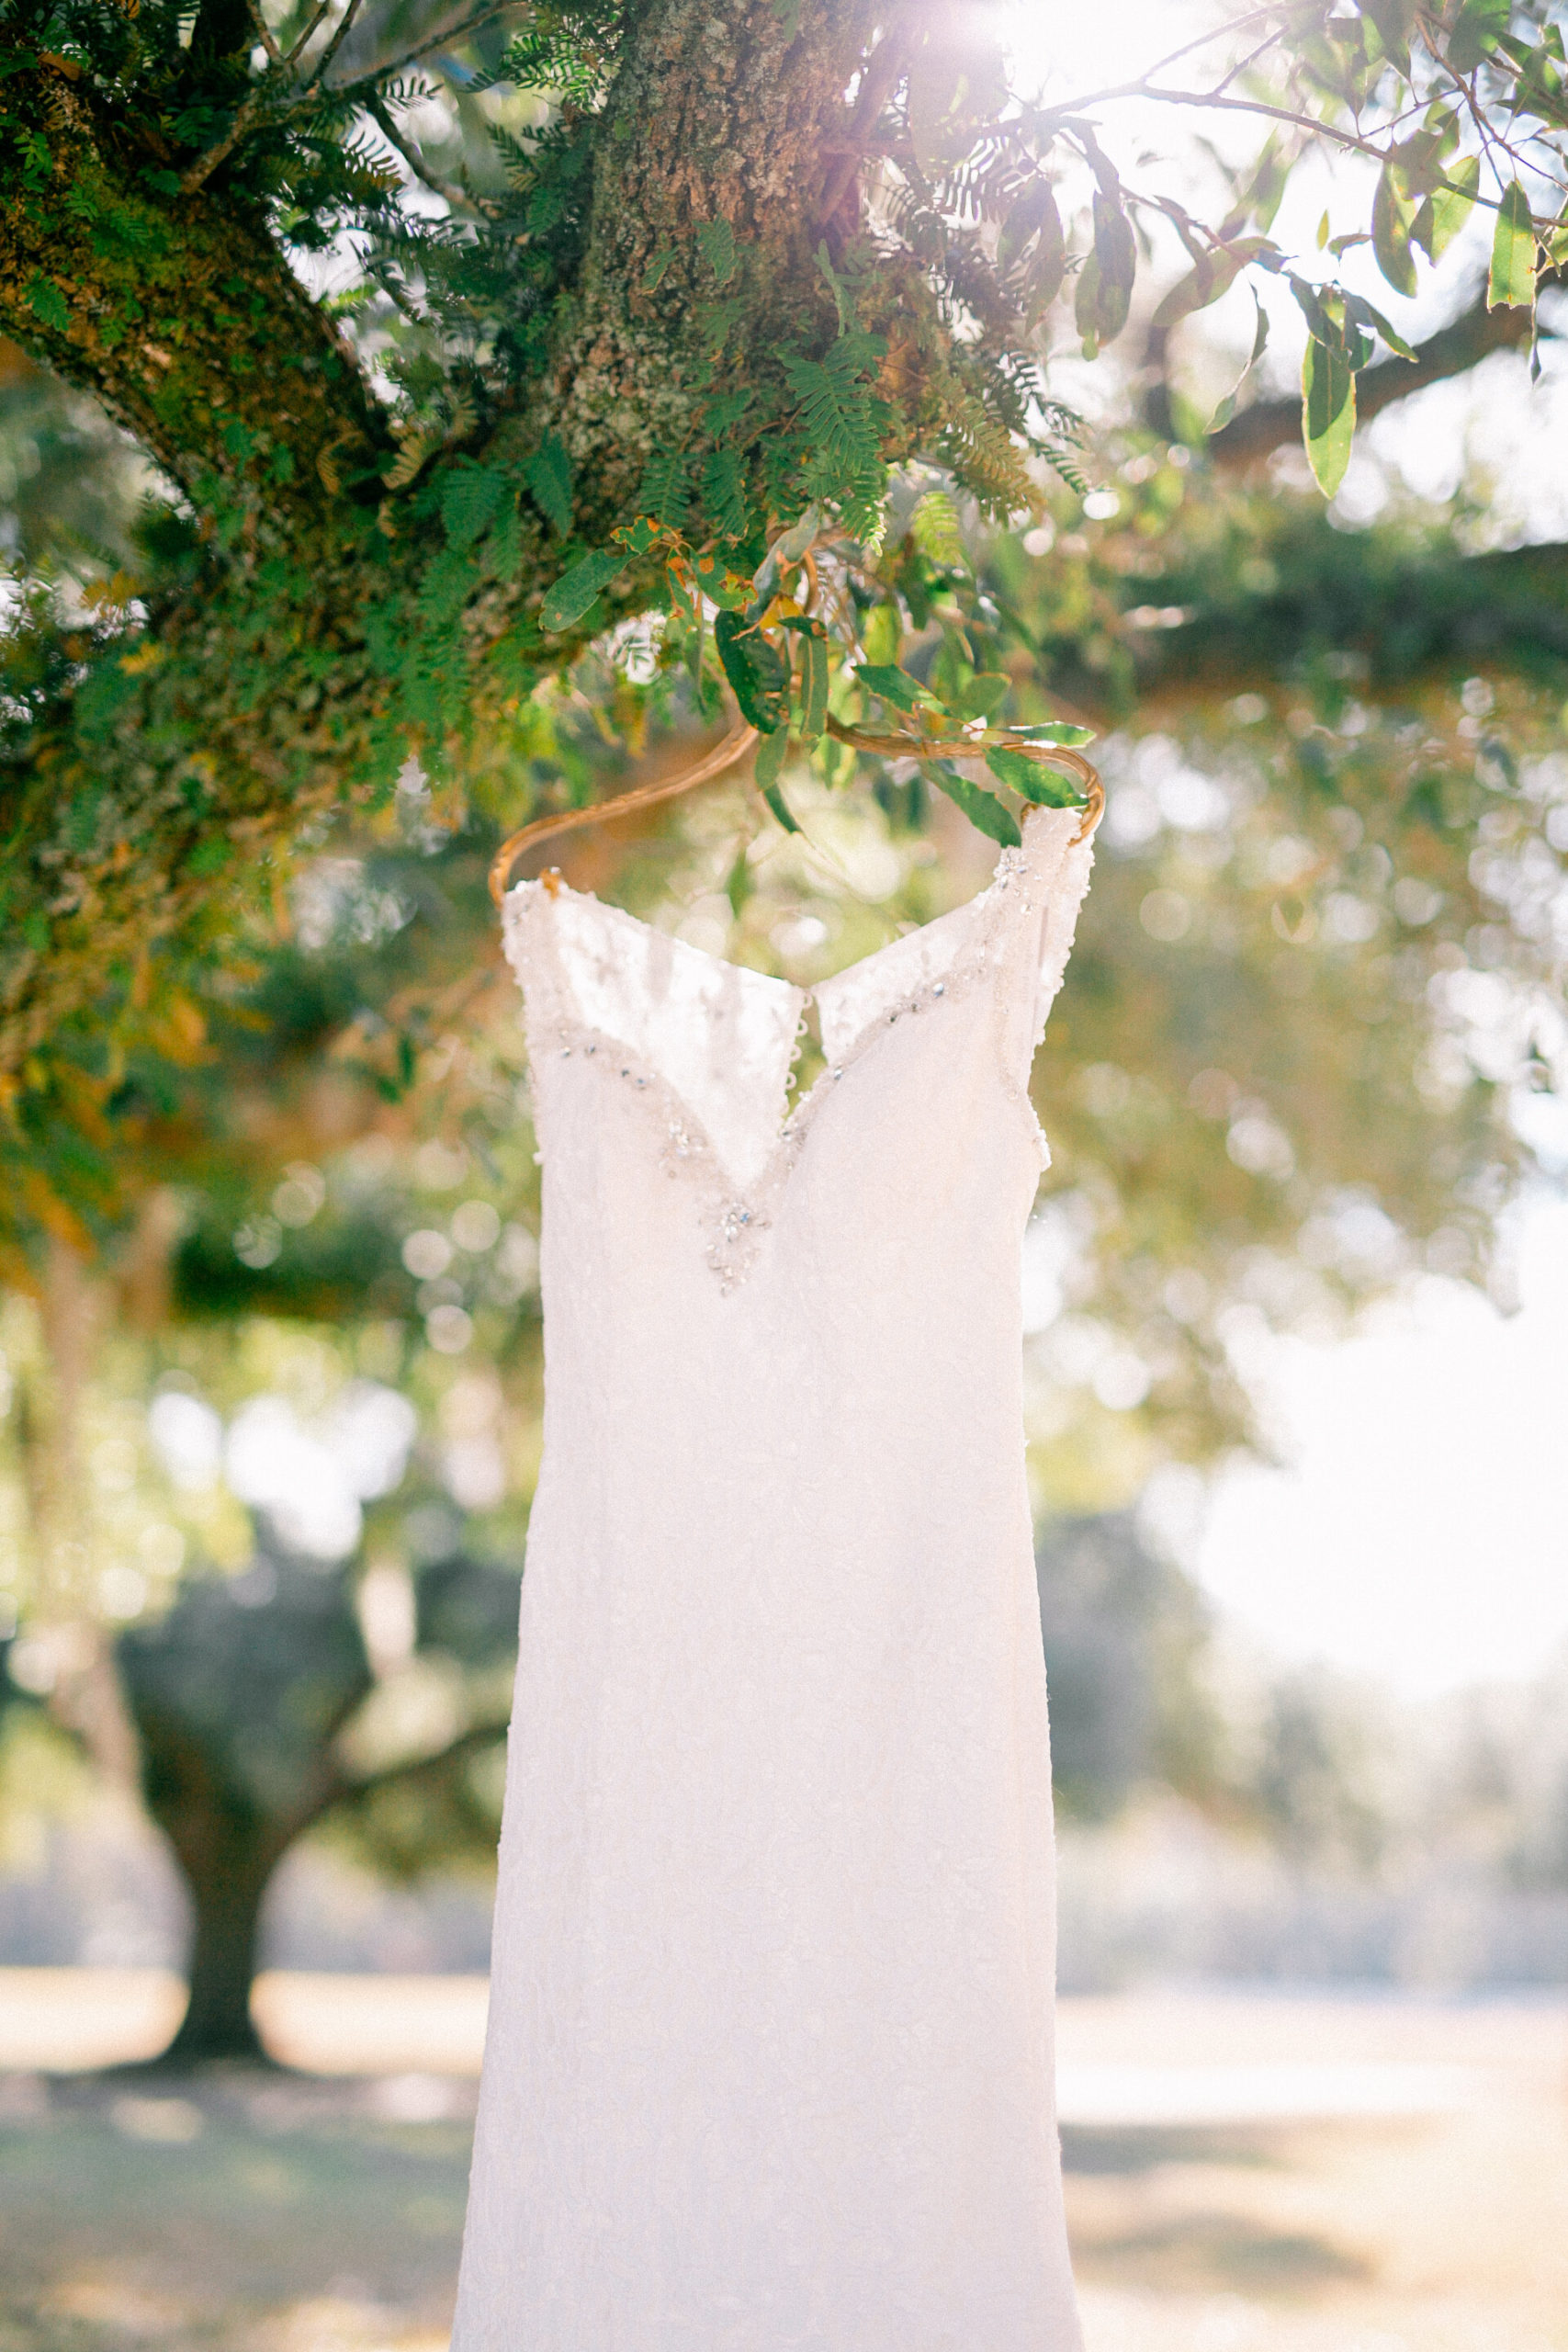 Close up portrait of beaded white wedding dress.